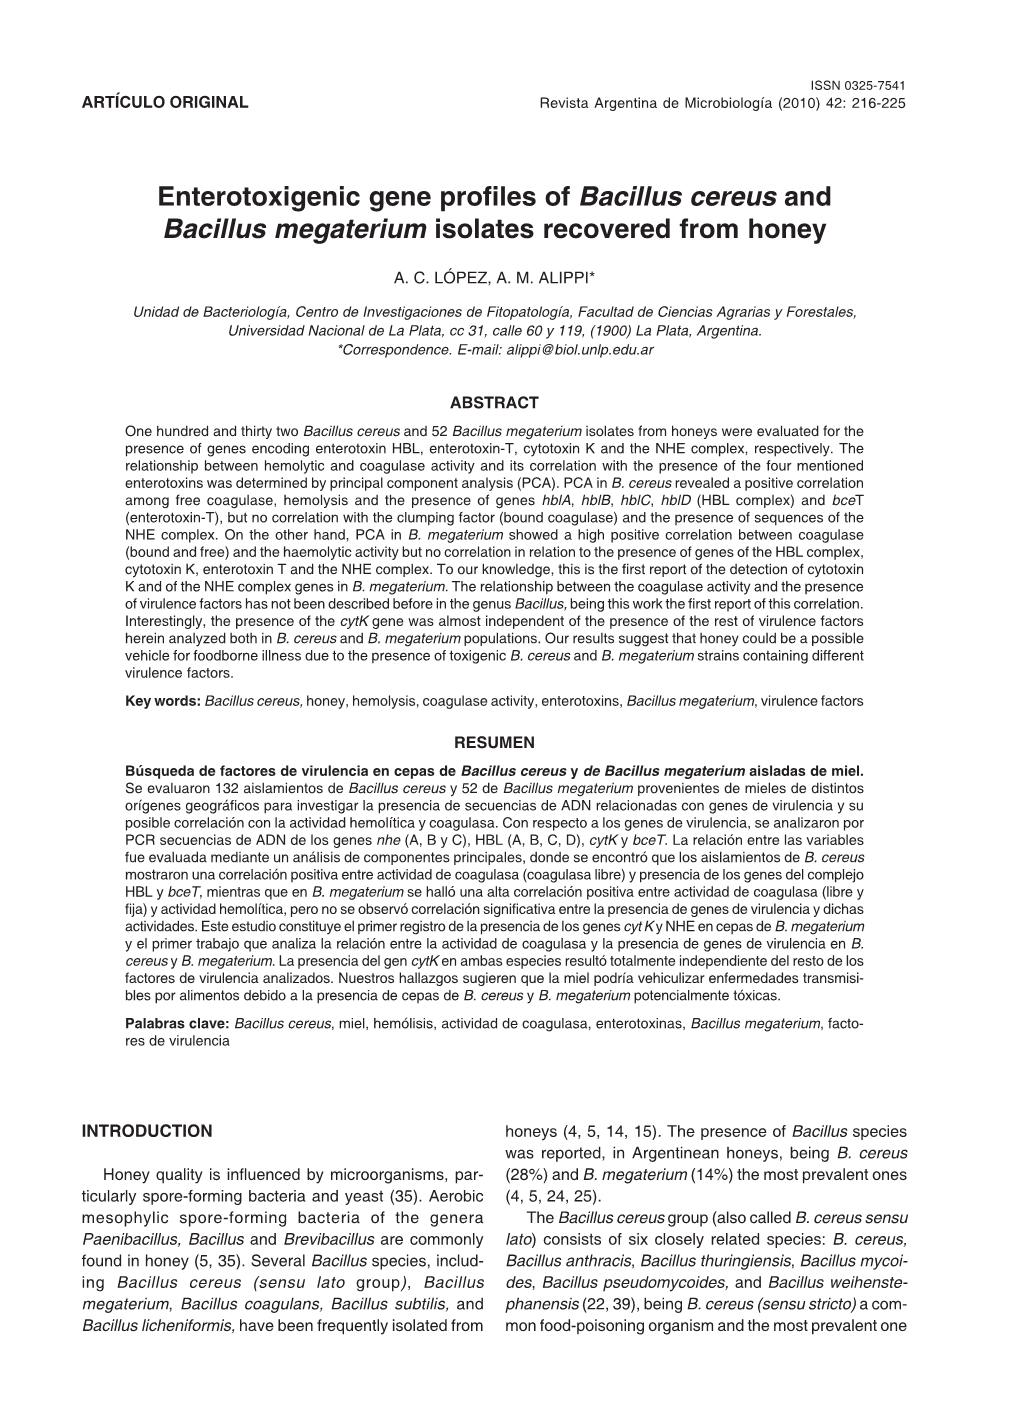 Enterotoxigenic Gene Profiles of Bacillus Cereus and Bacillus Megaterium Isolates Recovered from Honey